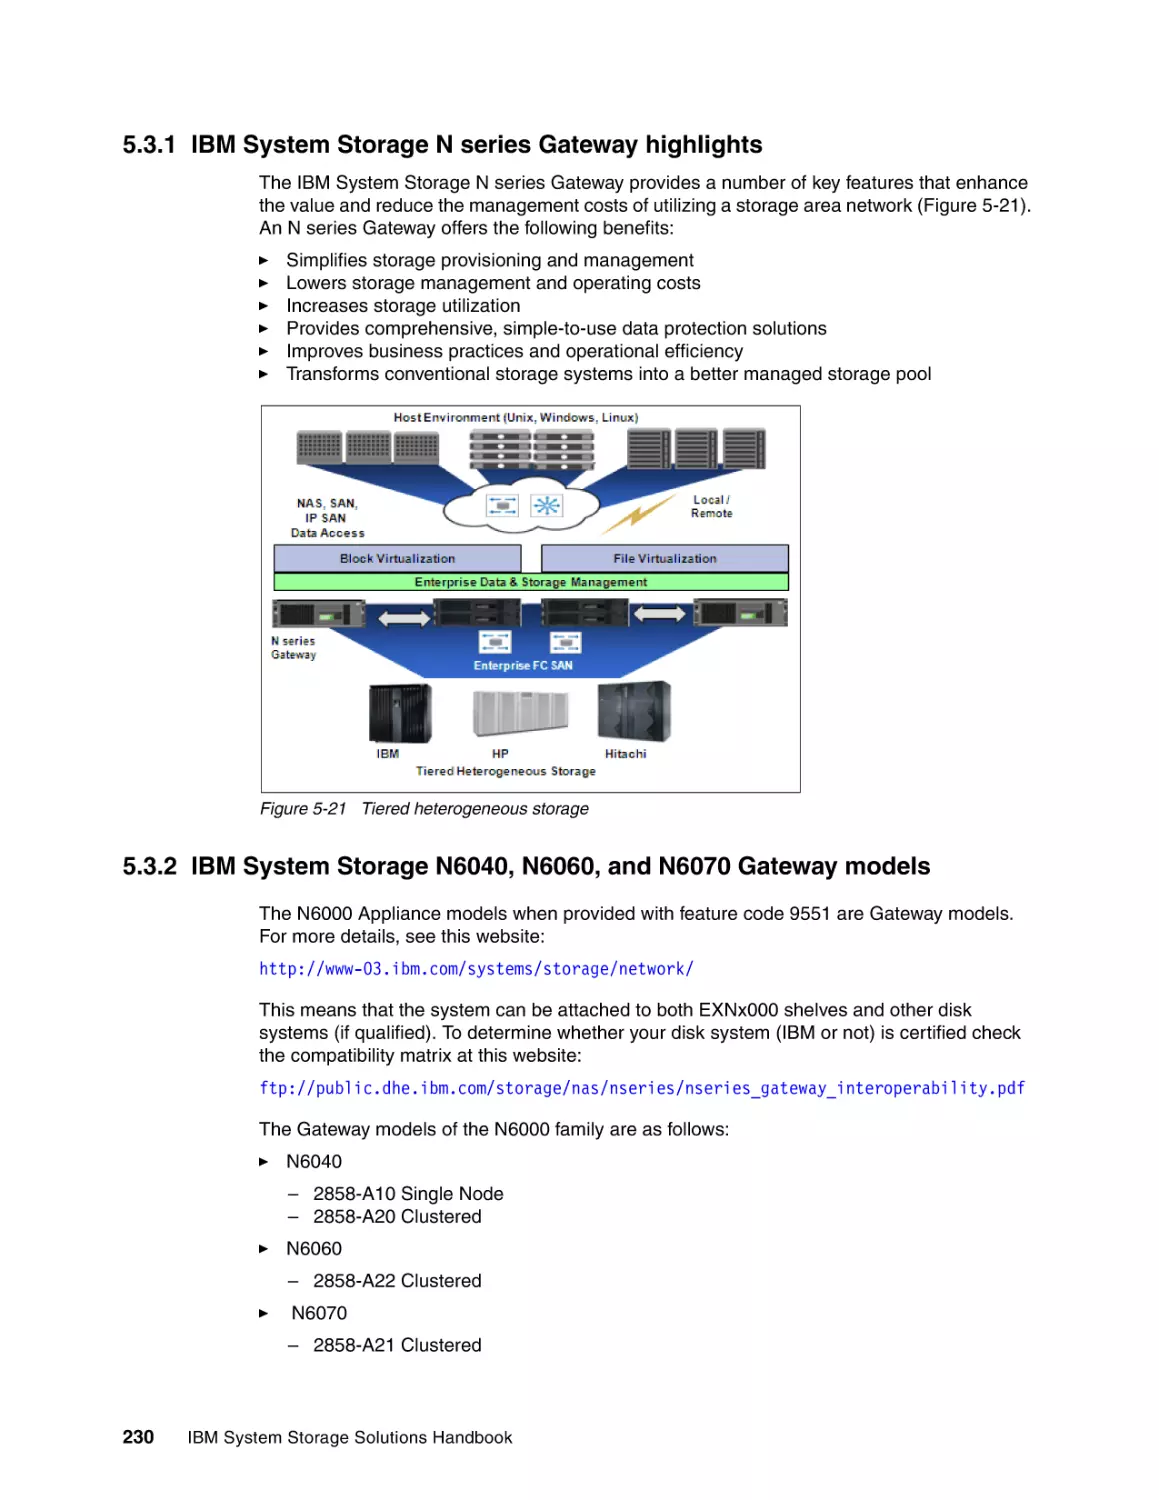 5.3.1 IBM System Storage N series Gateway highlights
5.3.2 IBM System Storage N6040, N6060, and N6070 Gateway models